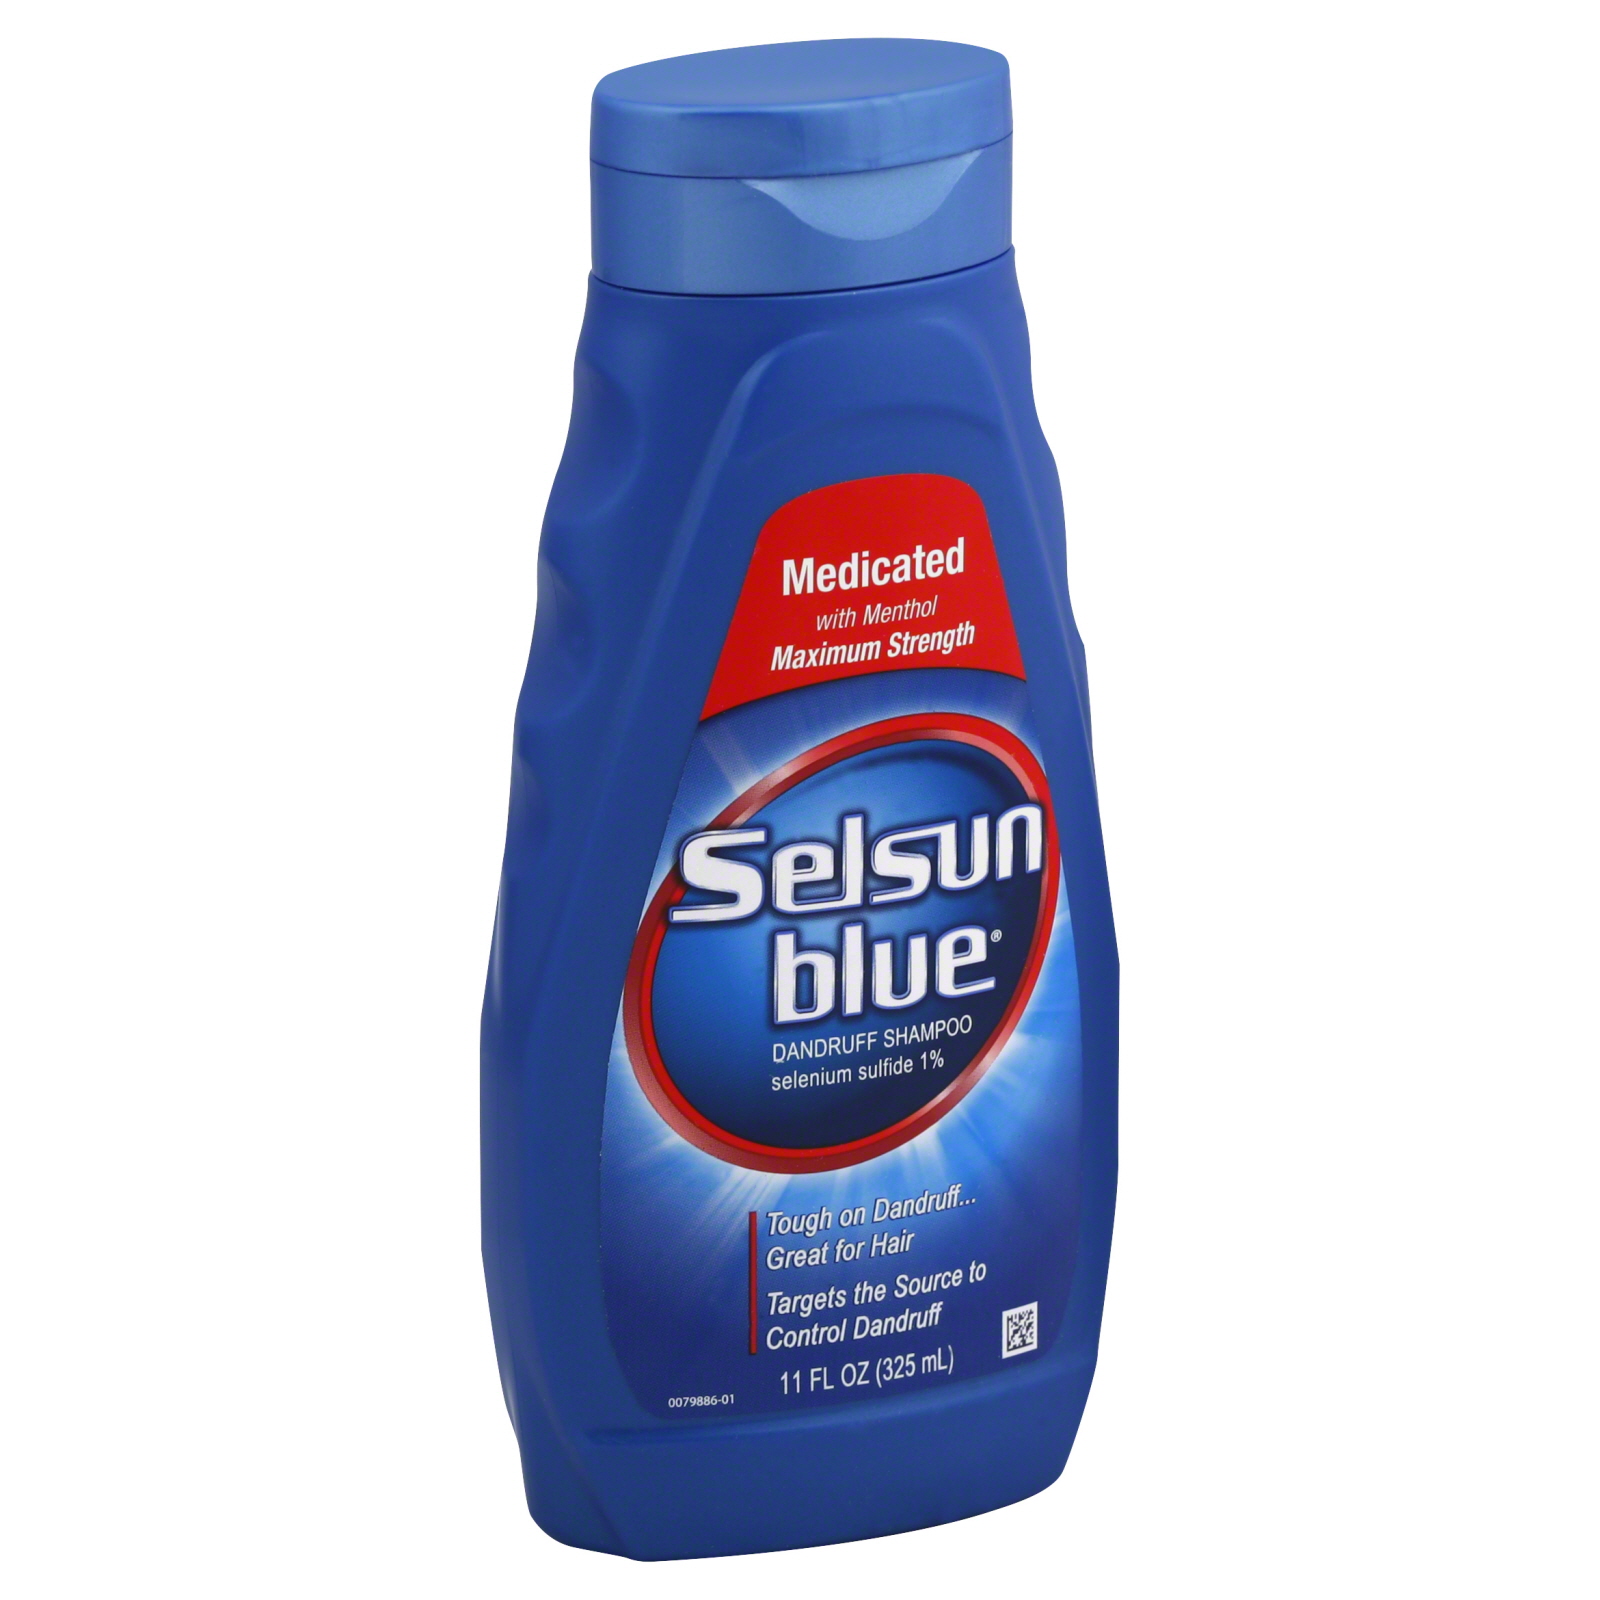 Selsun Blue Dandruff Shampoo with Menthol, Medicated Treatment, 11 fl oz (325 ml)